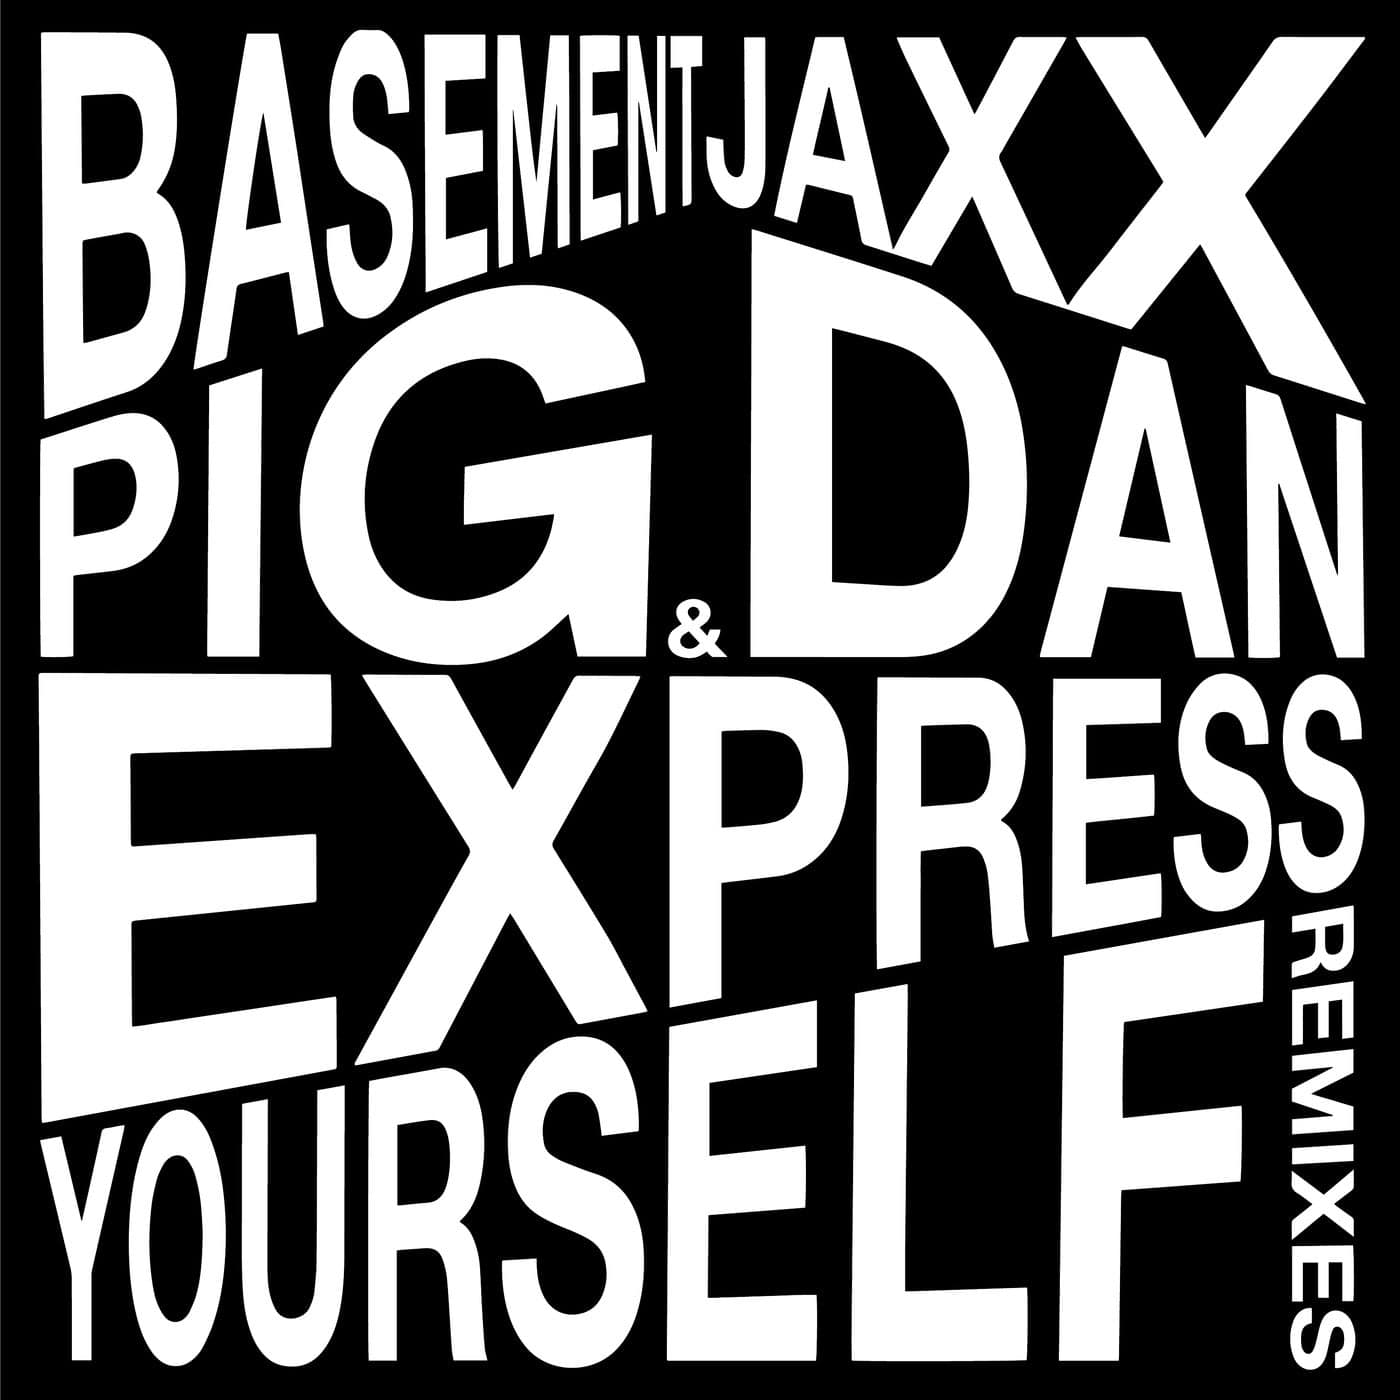 Download Pig&Dan, Basement Jaxx - Express Yourself (Pig&Dan Remixes) on Electrobuzz